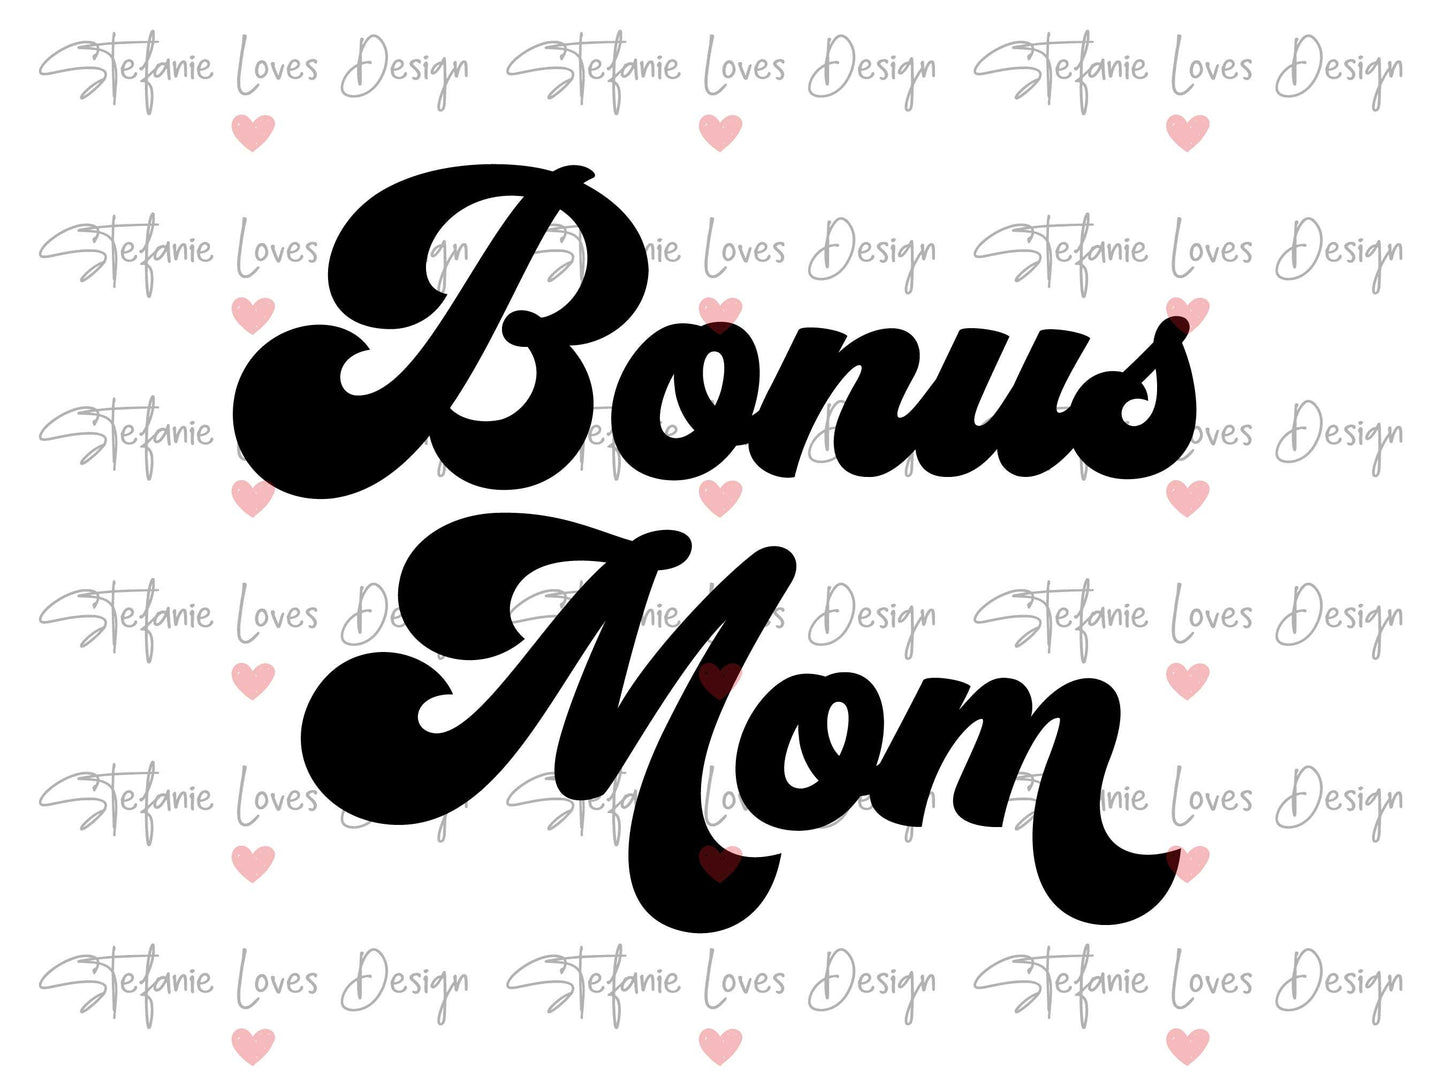 Bonus Mom svg, Bonus Mom Retro svg, Bonus Mom Shirt, Mom, Digital Design